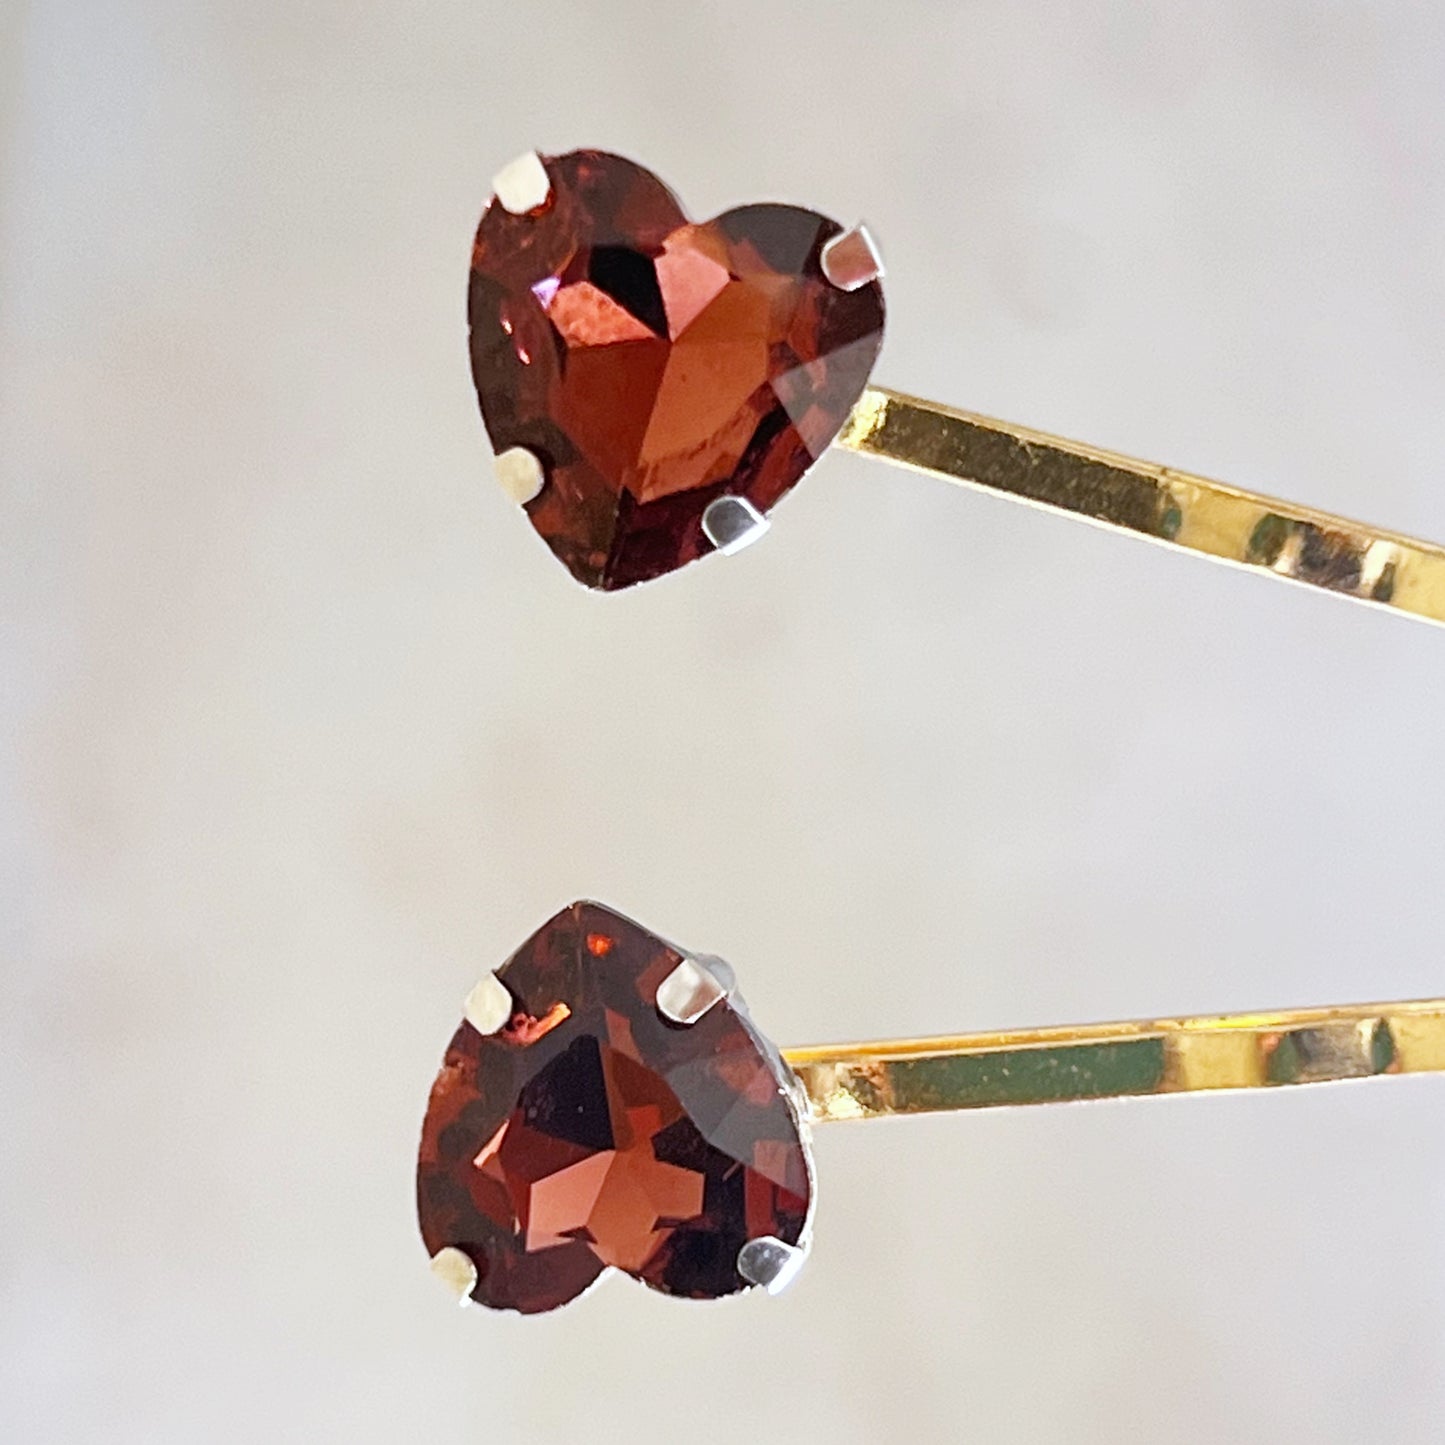 Cranberry Red Rhinestone Heart Hair Pins: Elegant Romantic Accessories